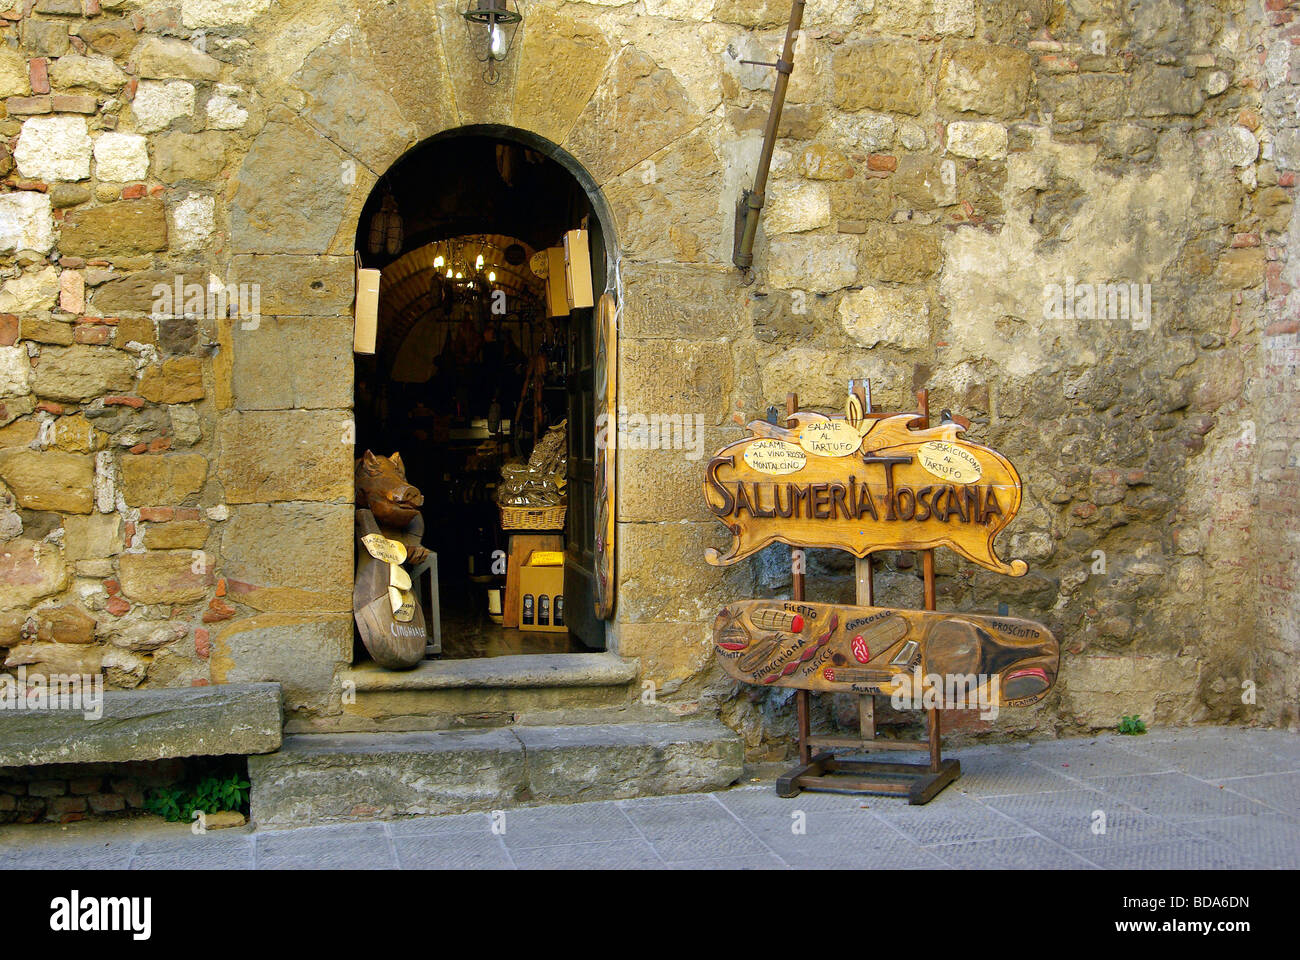 Salumeria Toscana a gourmet food shop just inside the Porta al Prato in Montepulciano Stock Photo